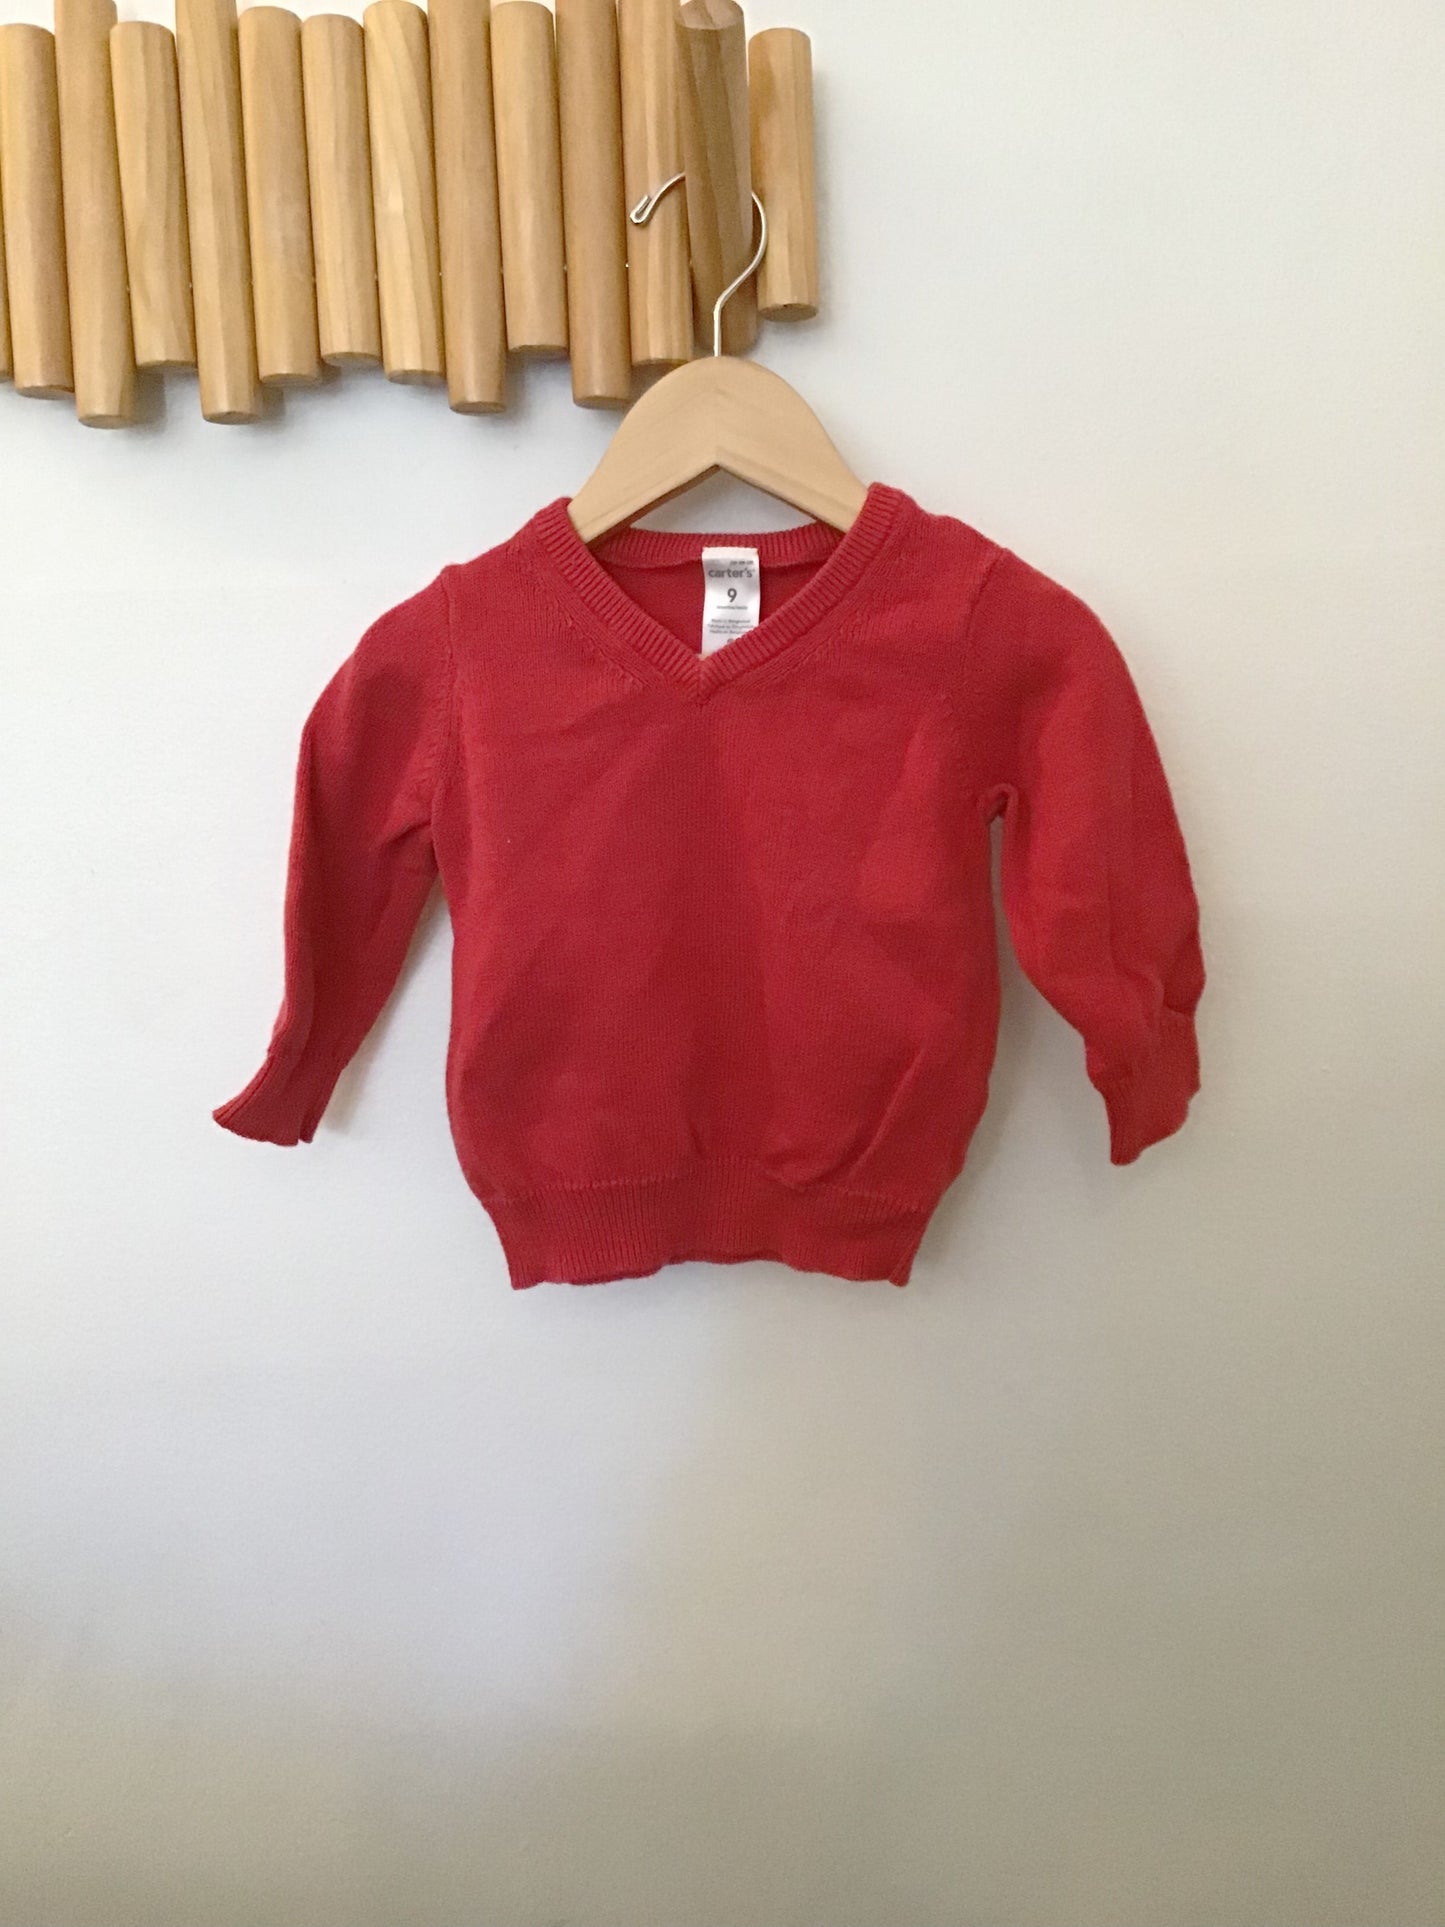 Red v-neck sweater 9m